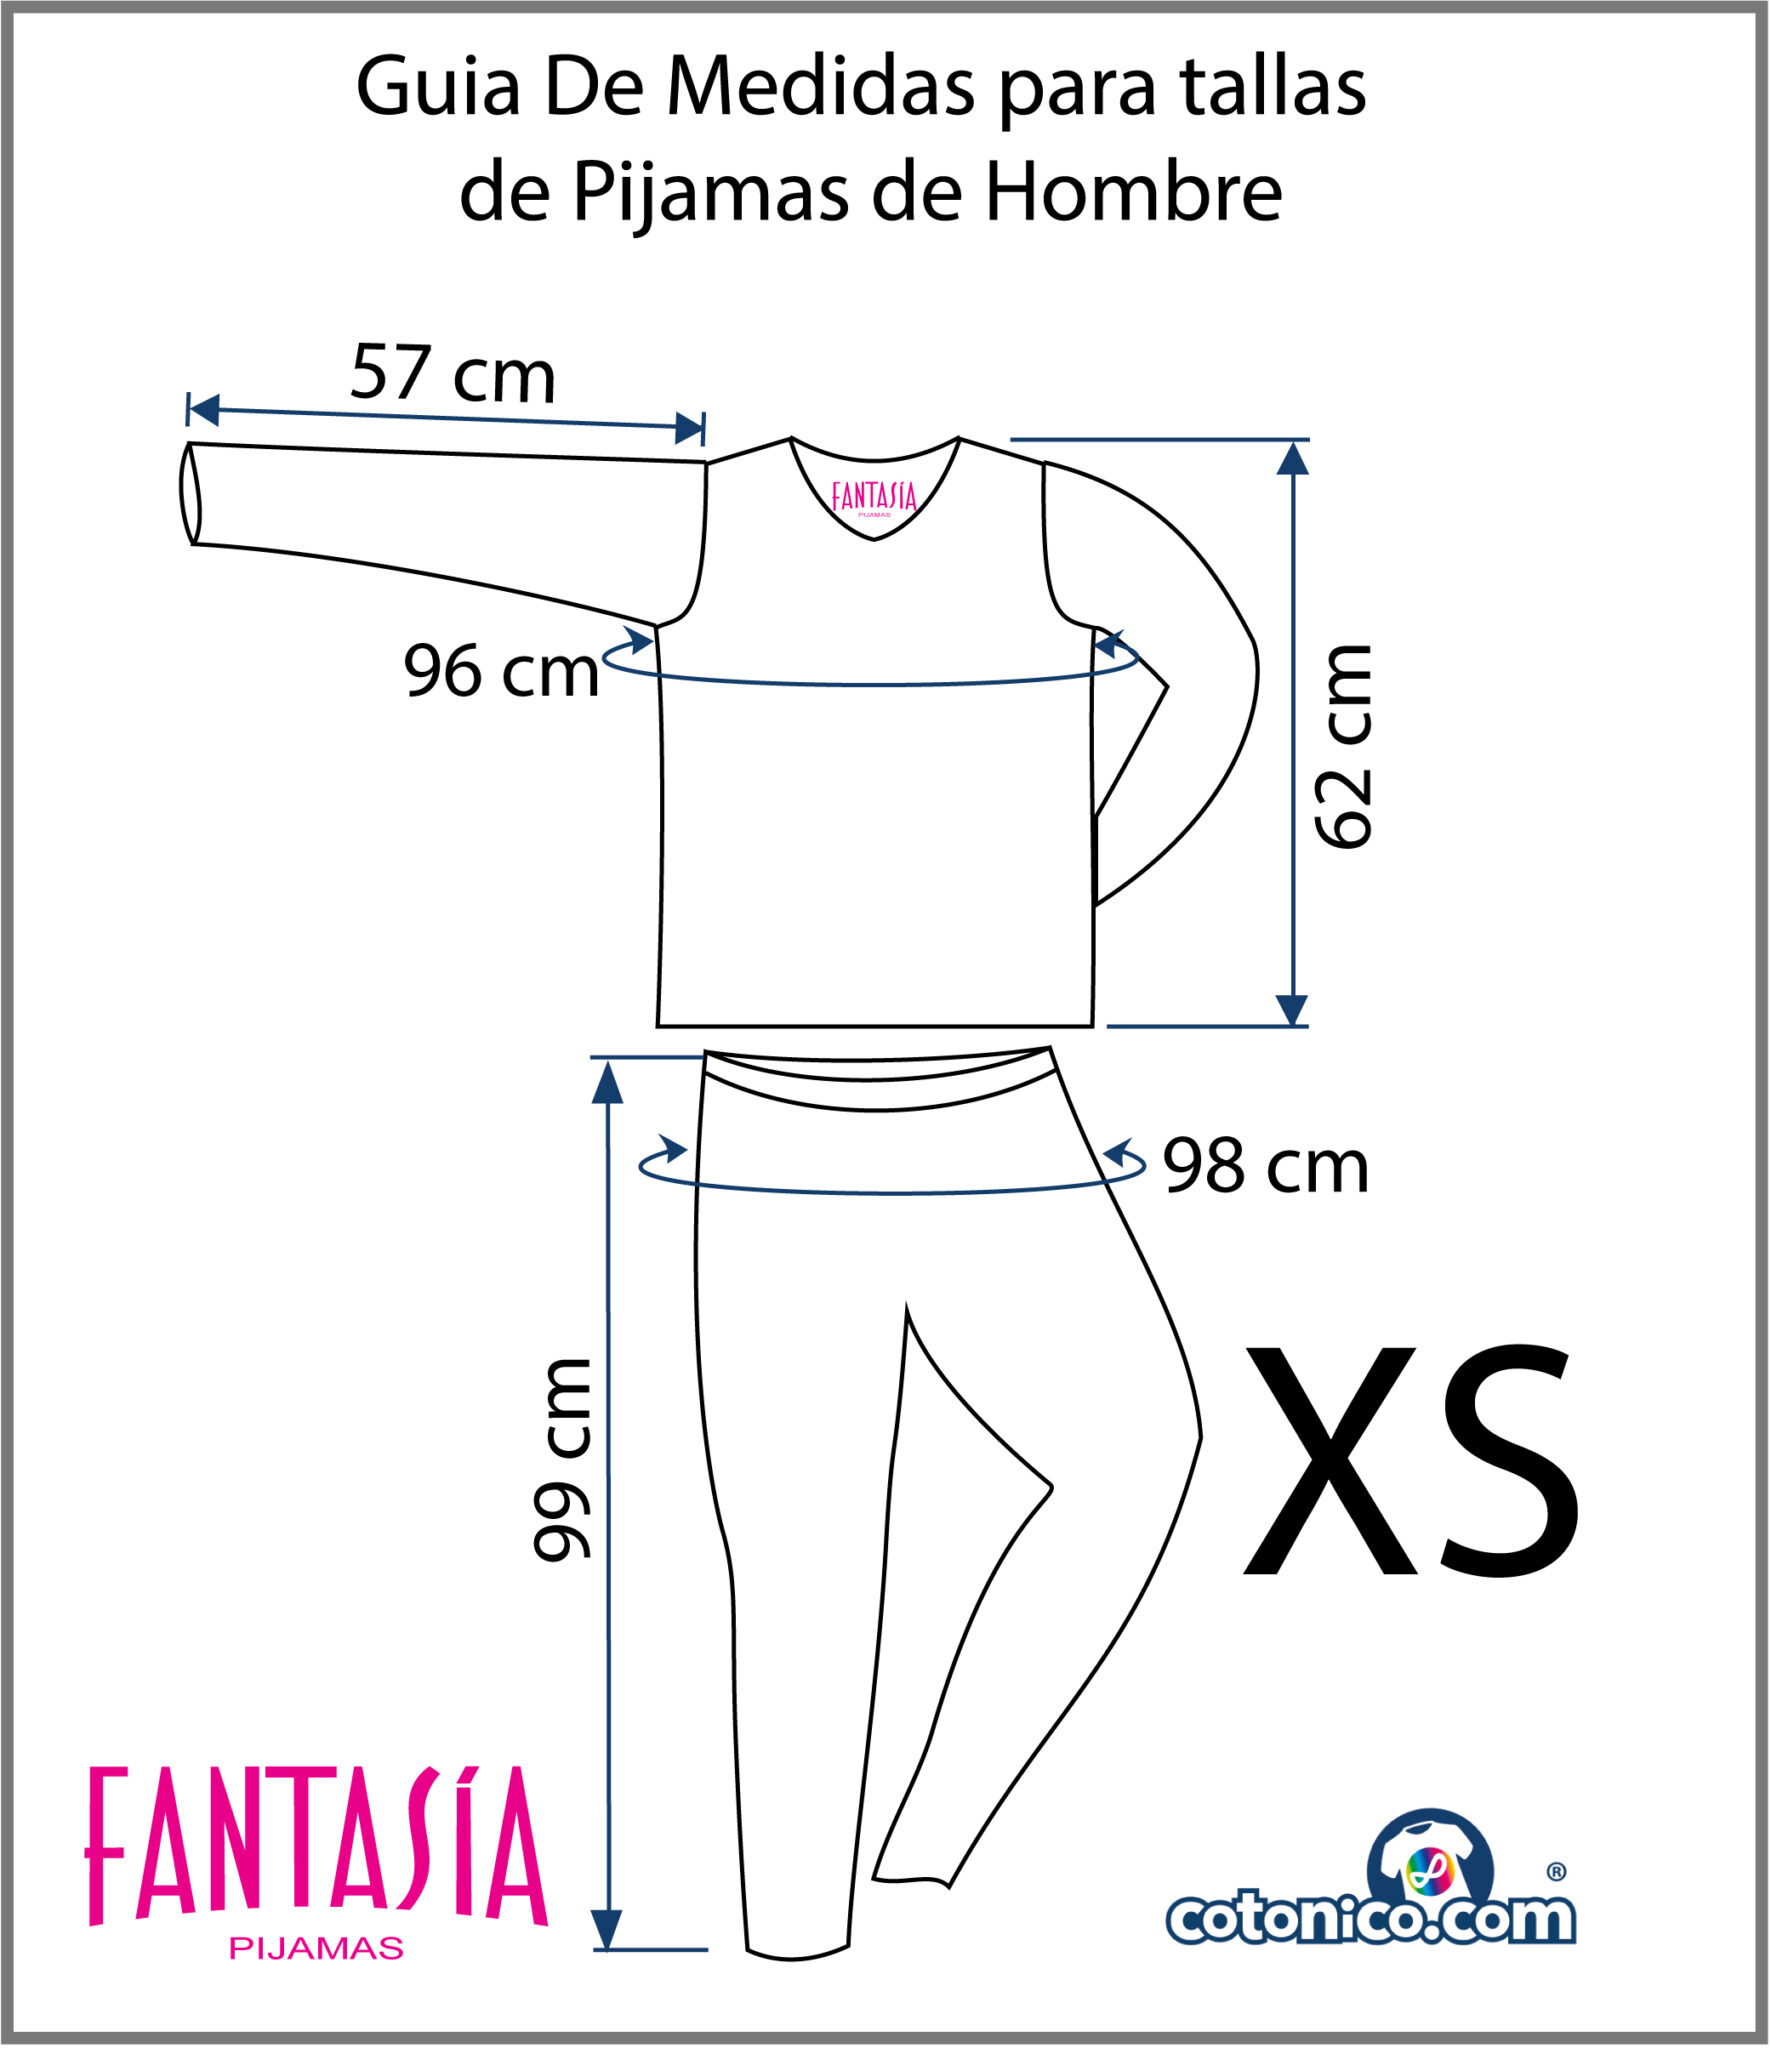 Guia-De-Tallas-Pijamas-De-Hombre-XS